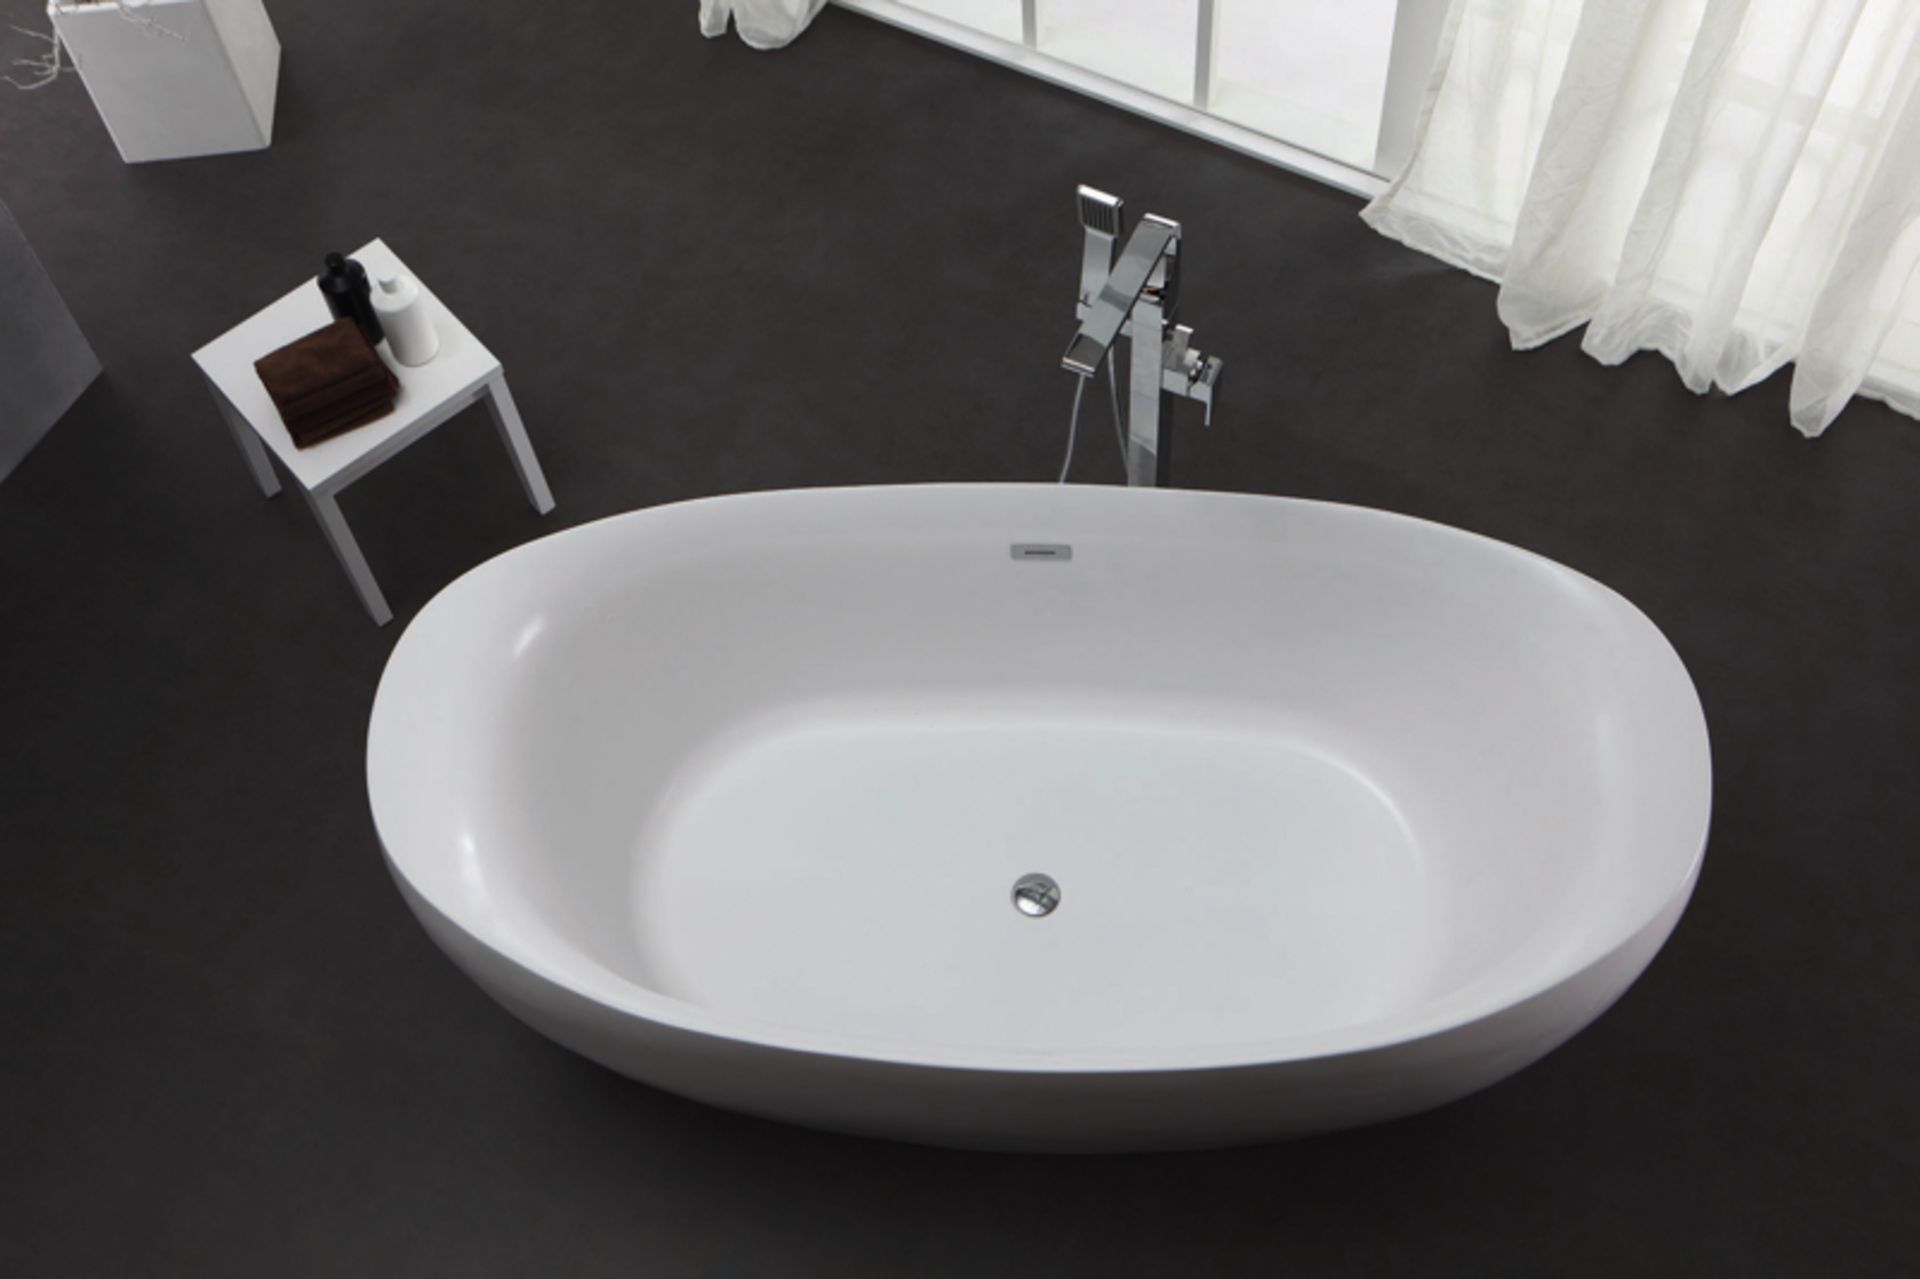 1 x MarbleTECH Serenity Bath - Image 3 of 5